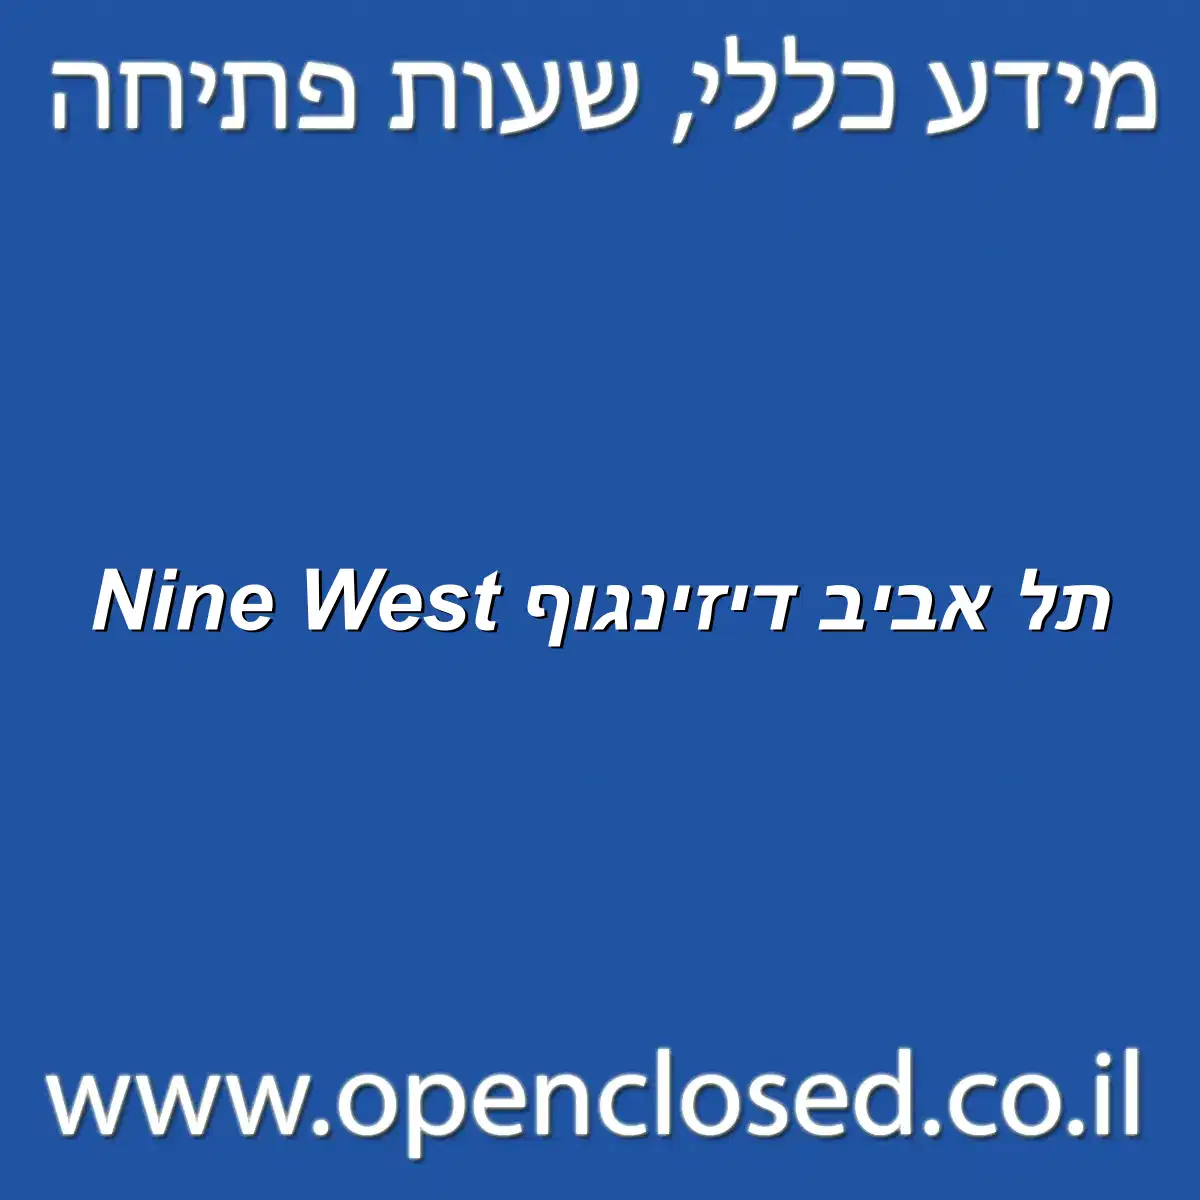 Nine West תל אביב דיזינגוף